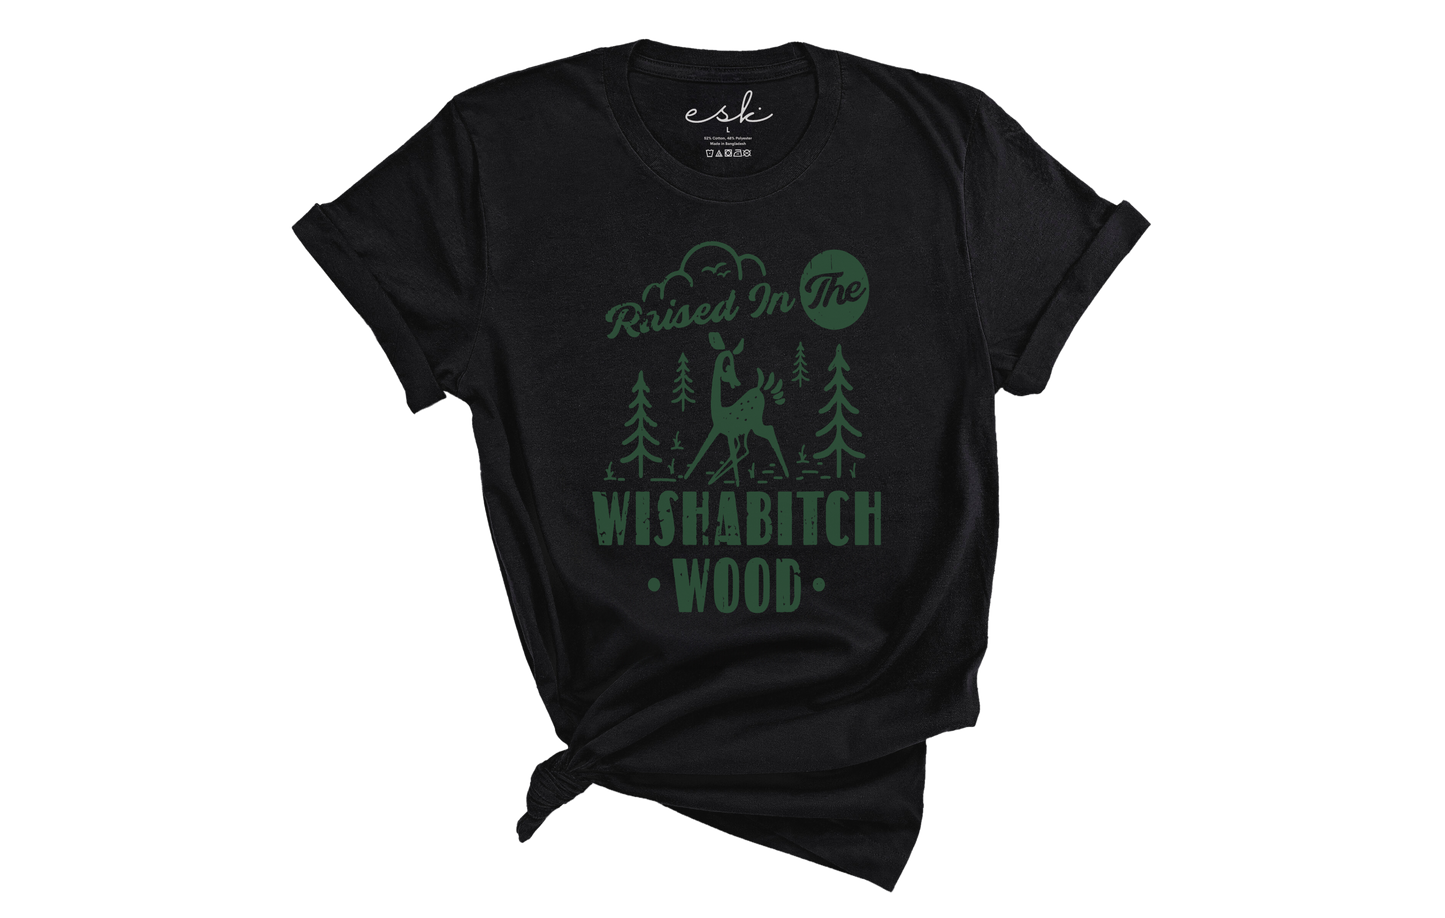 Wishabitch Woods Tee